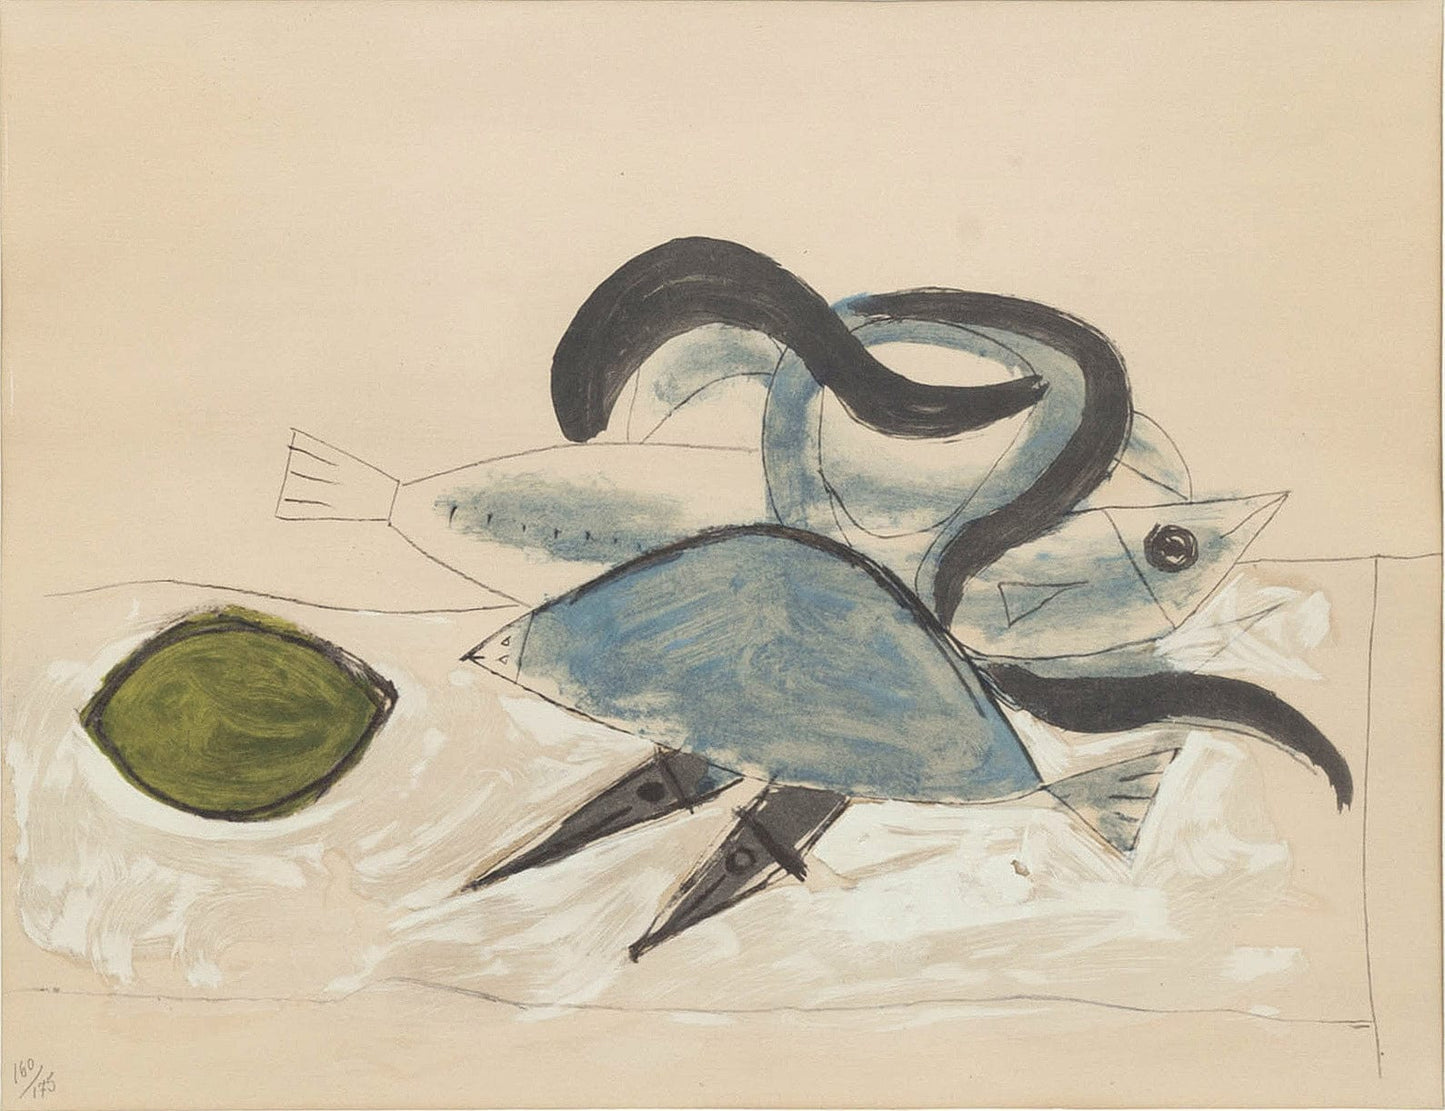 Pablo Picasso's Lithograph Untitled From Faunes et Flores De Antibes